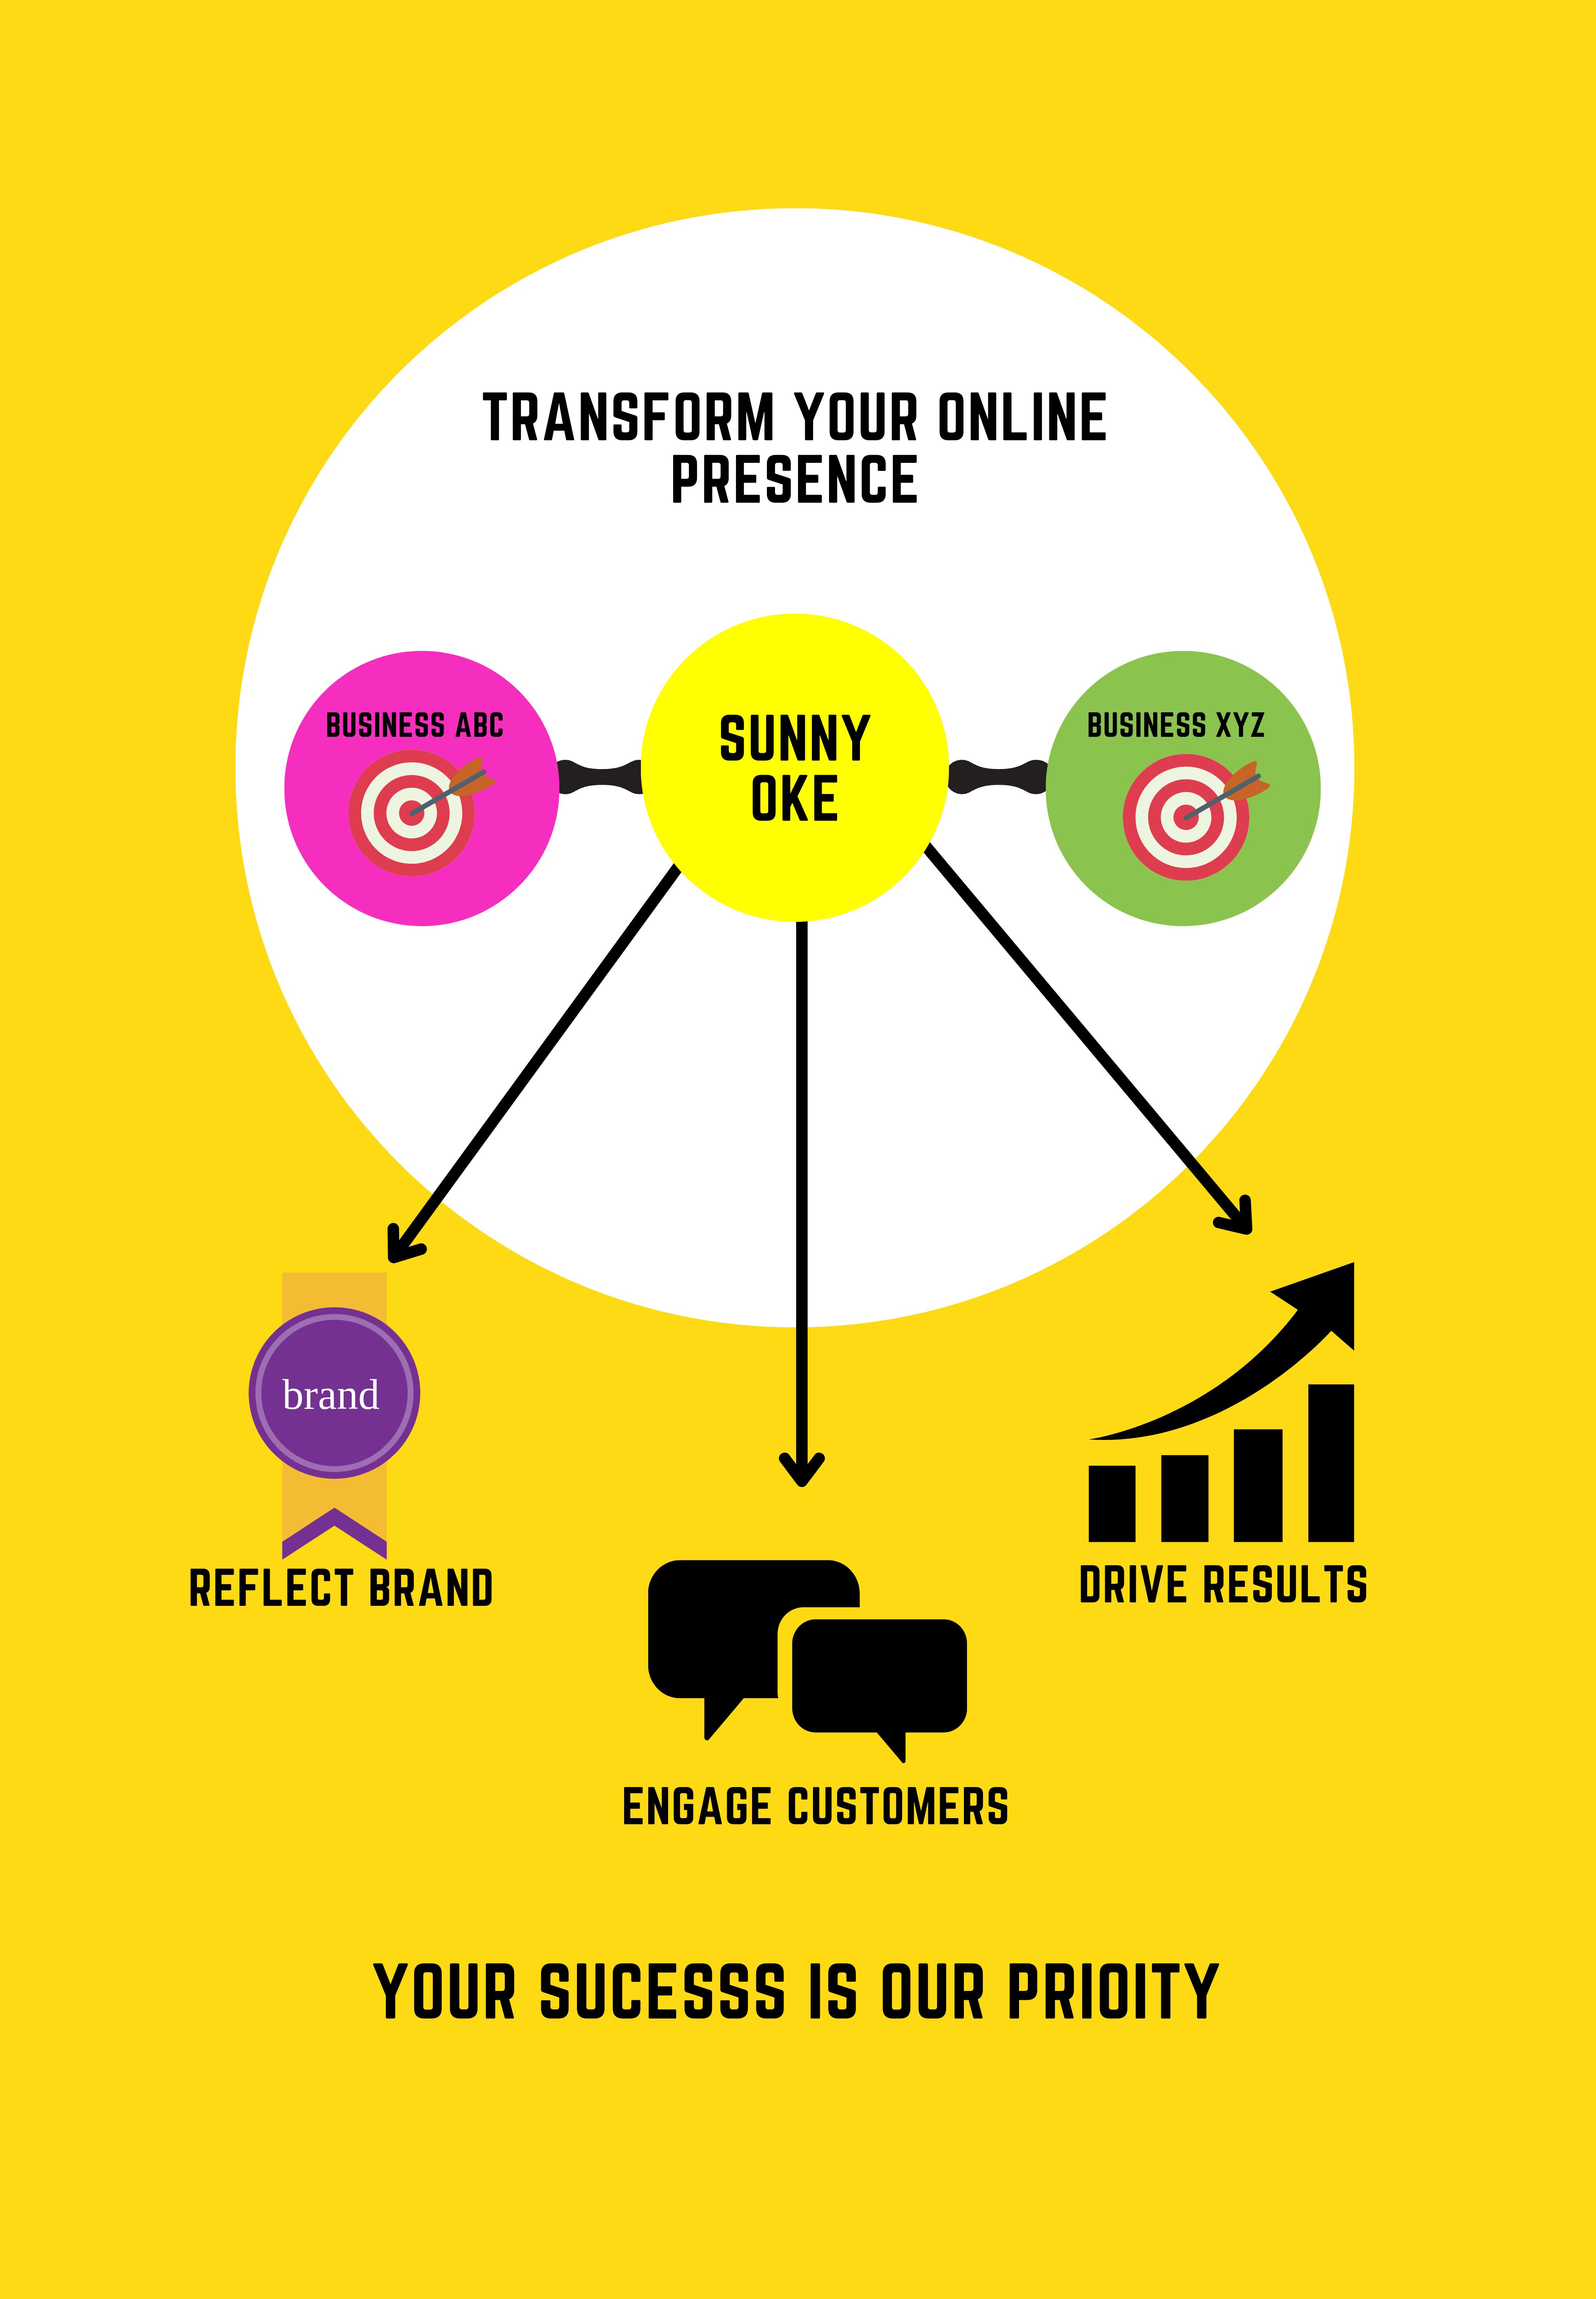 Transform Your Business - Sunny Oke